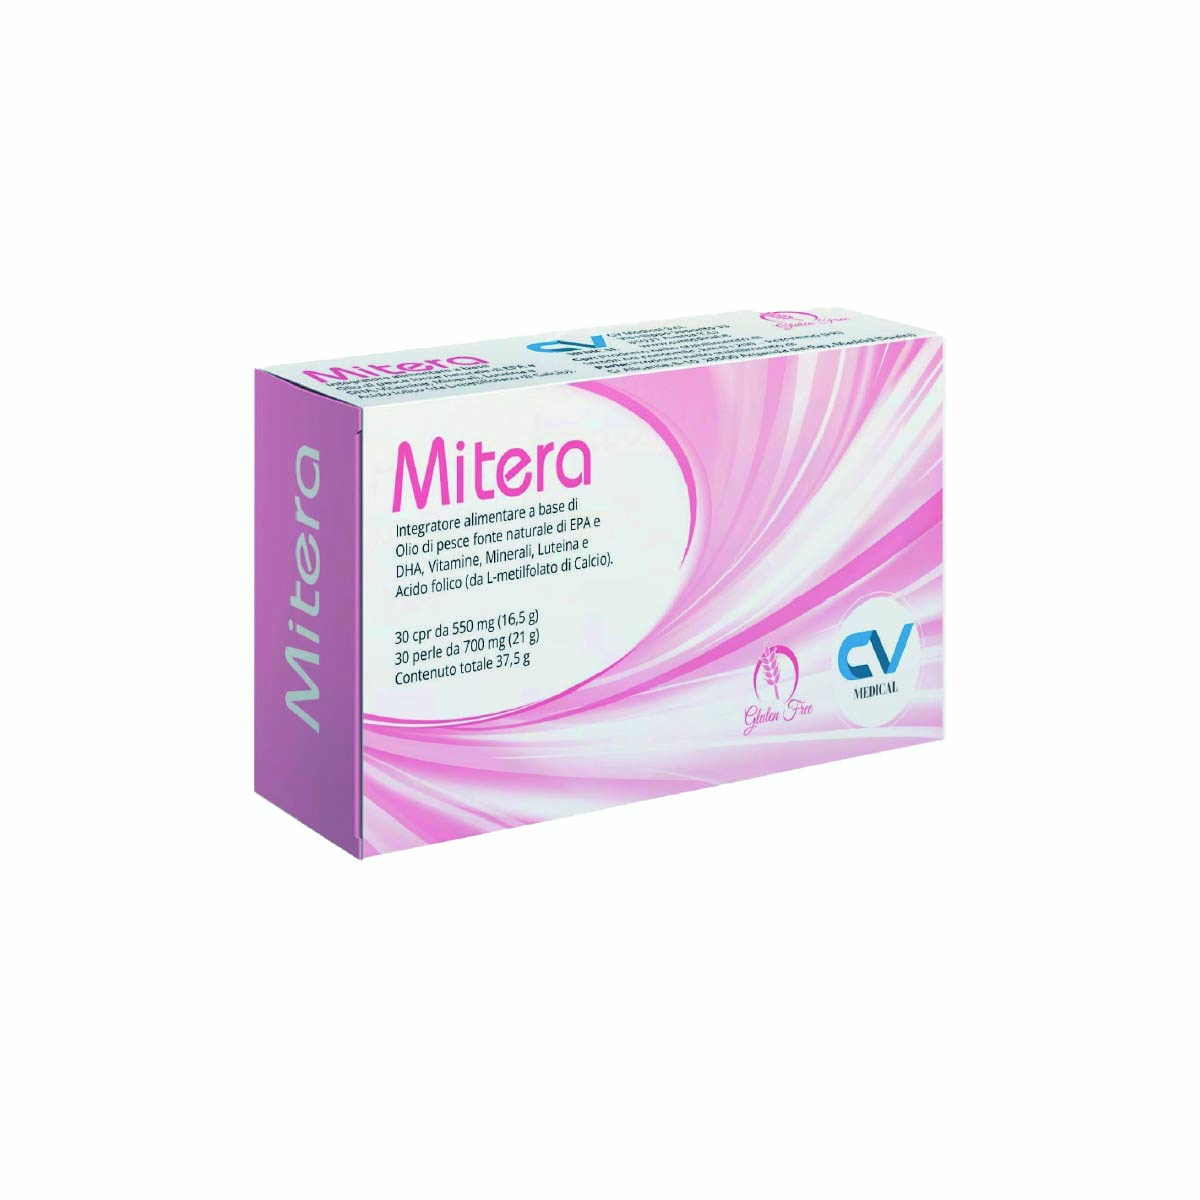 Image of Mitera CV Medical 30 Compresse + 30 Perle